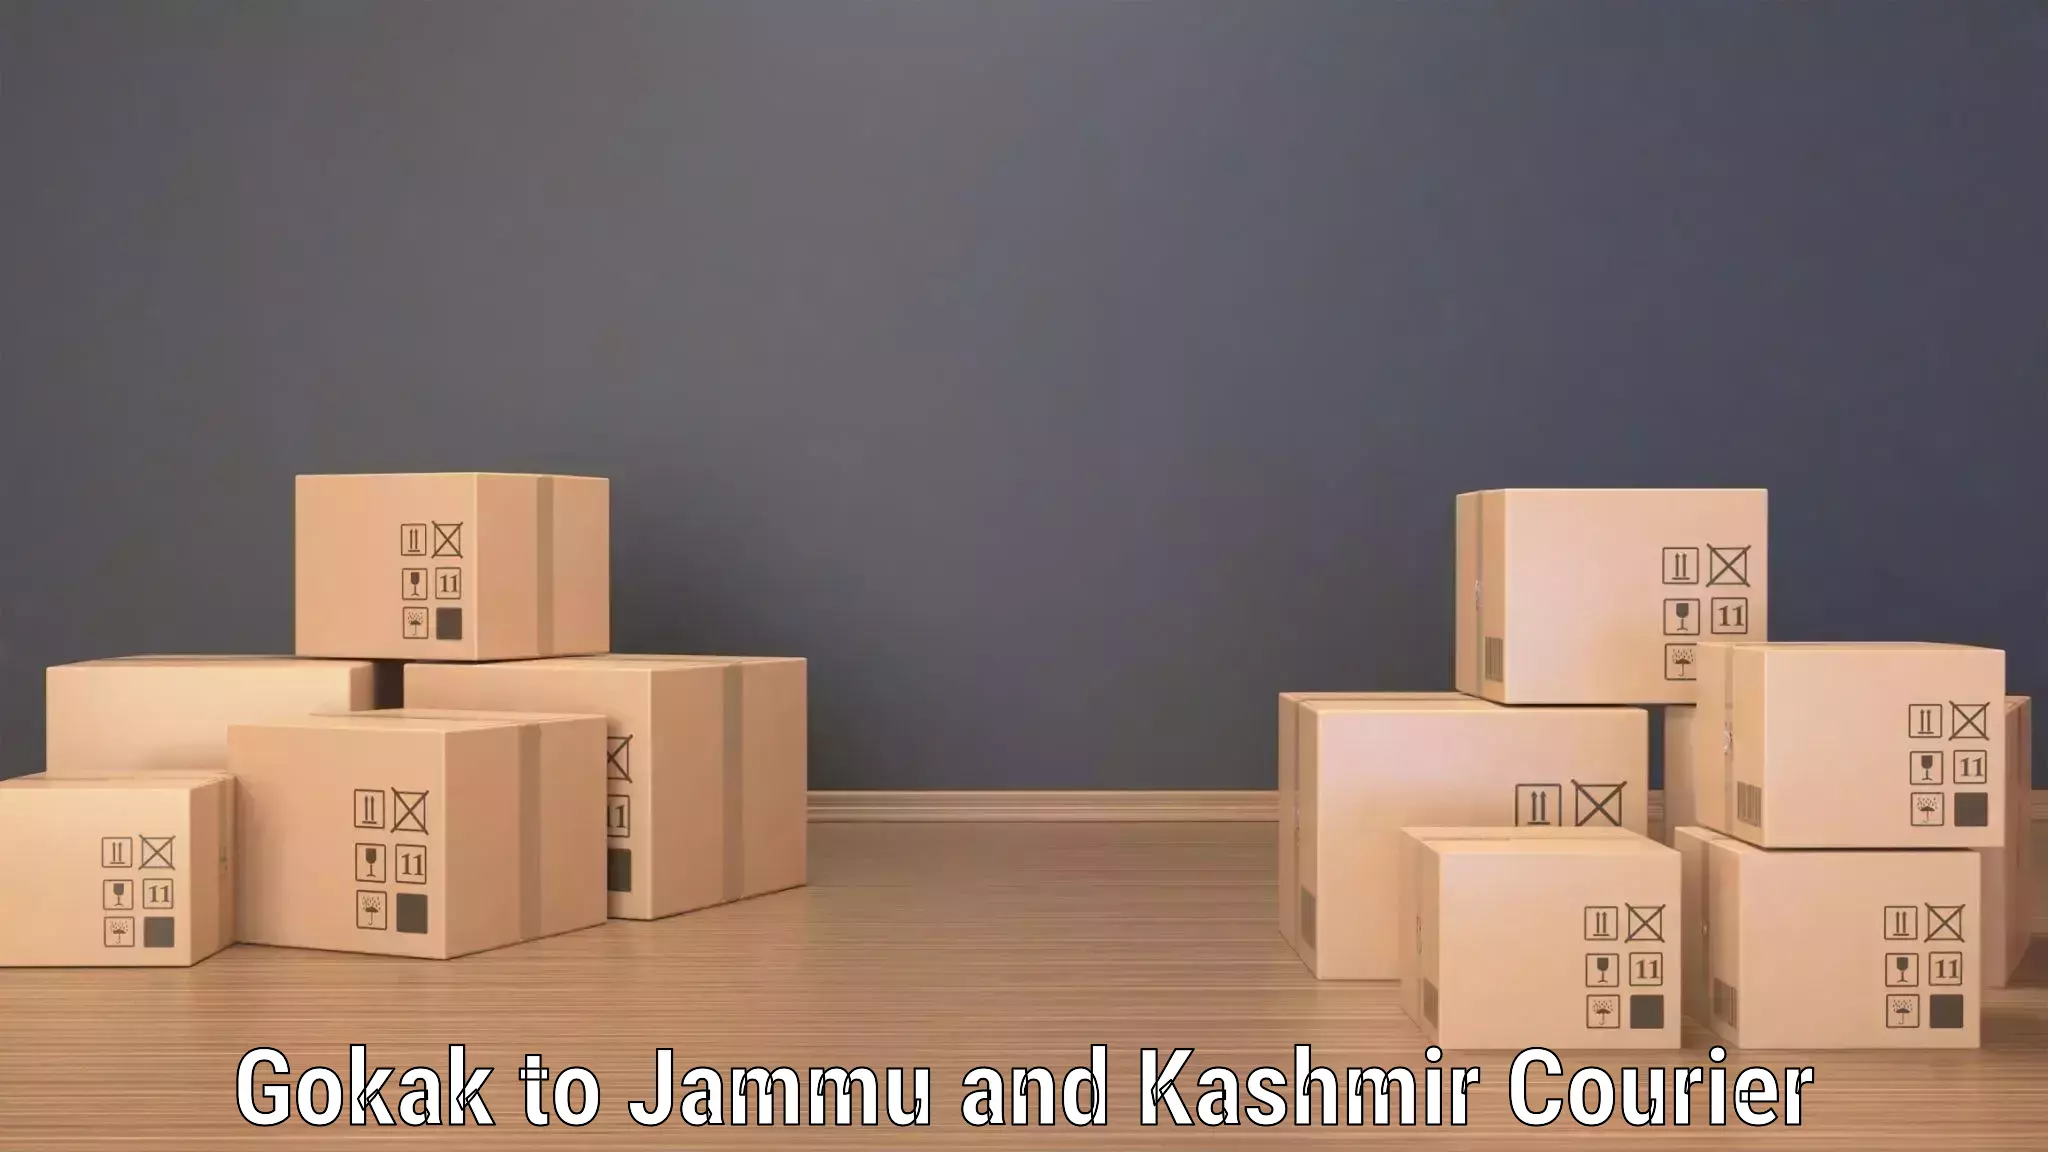 24/7 courier service Gokak to University of Jammu